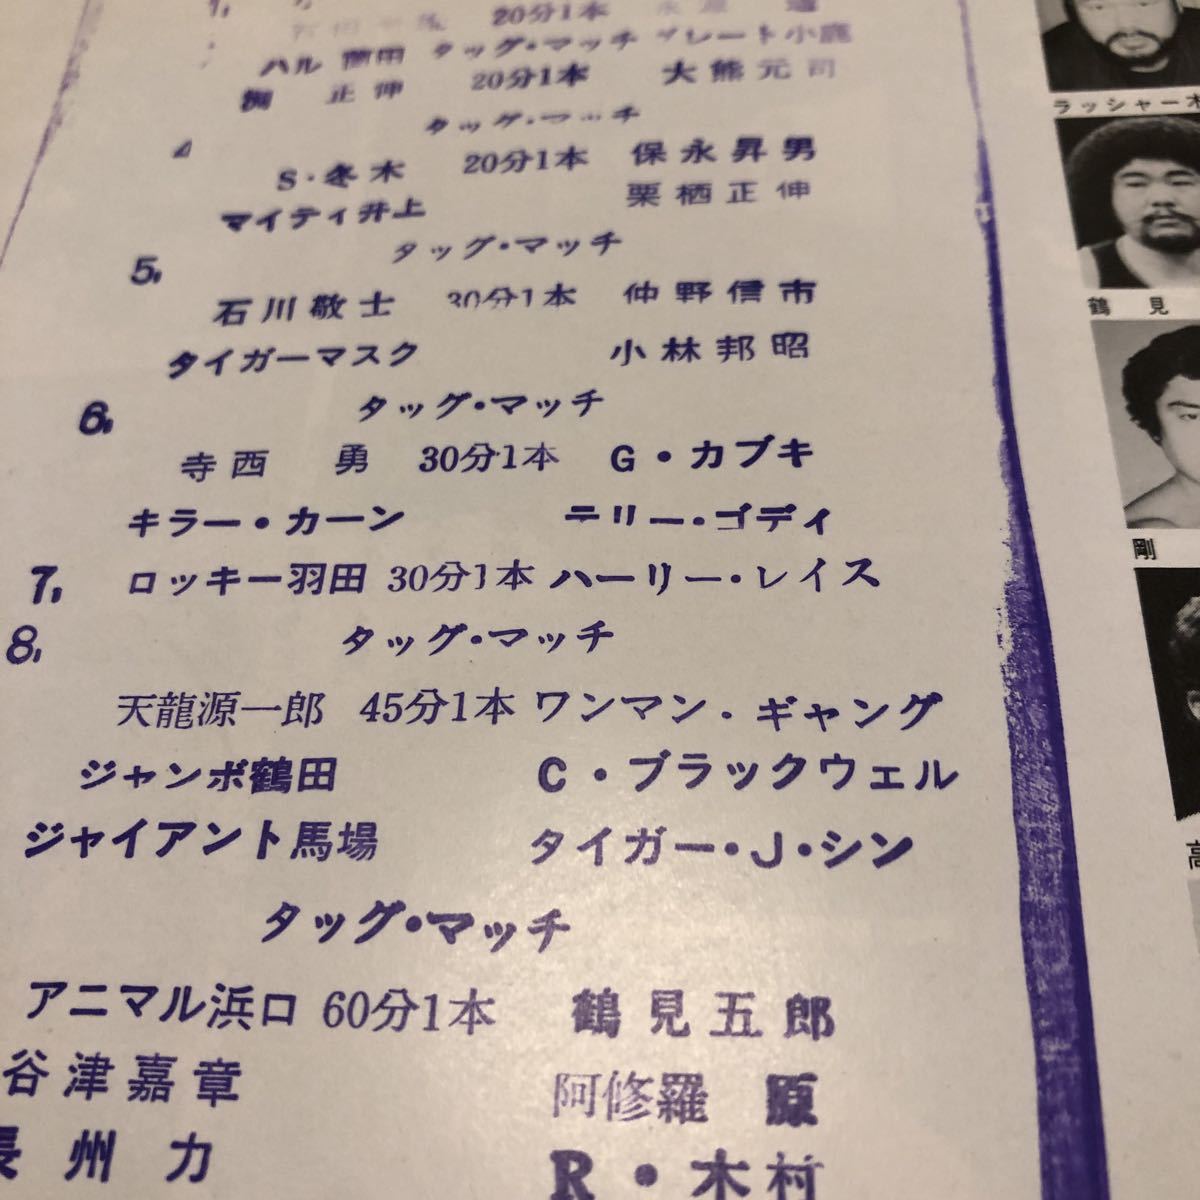  all Japan Professional Wrestling pamphlet 86re chair sin Tiger Mask 